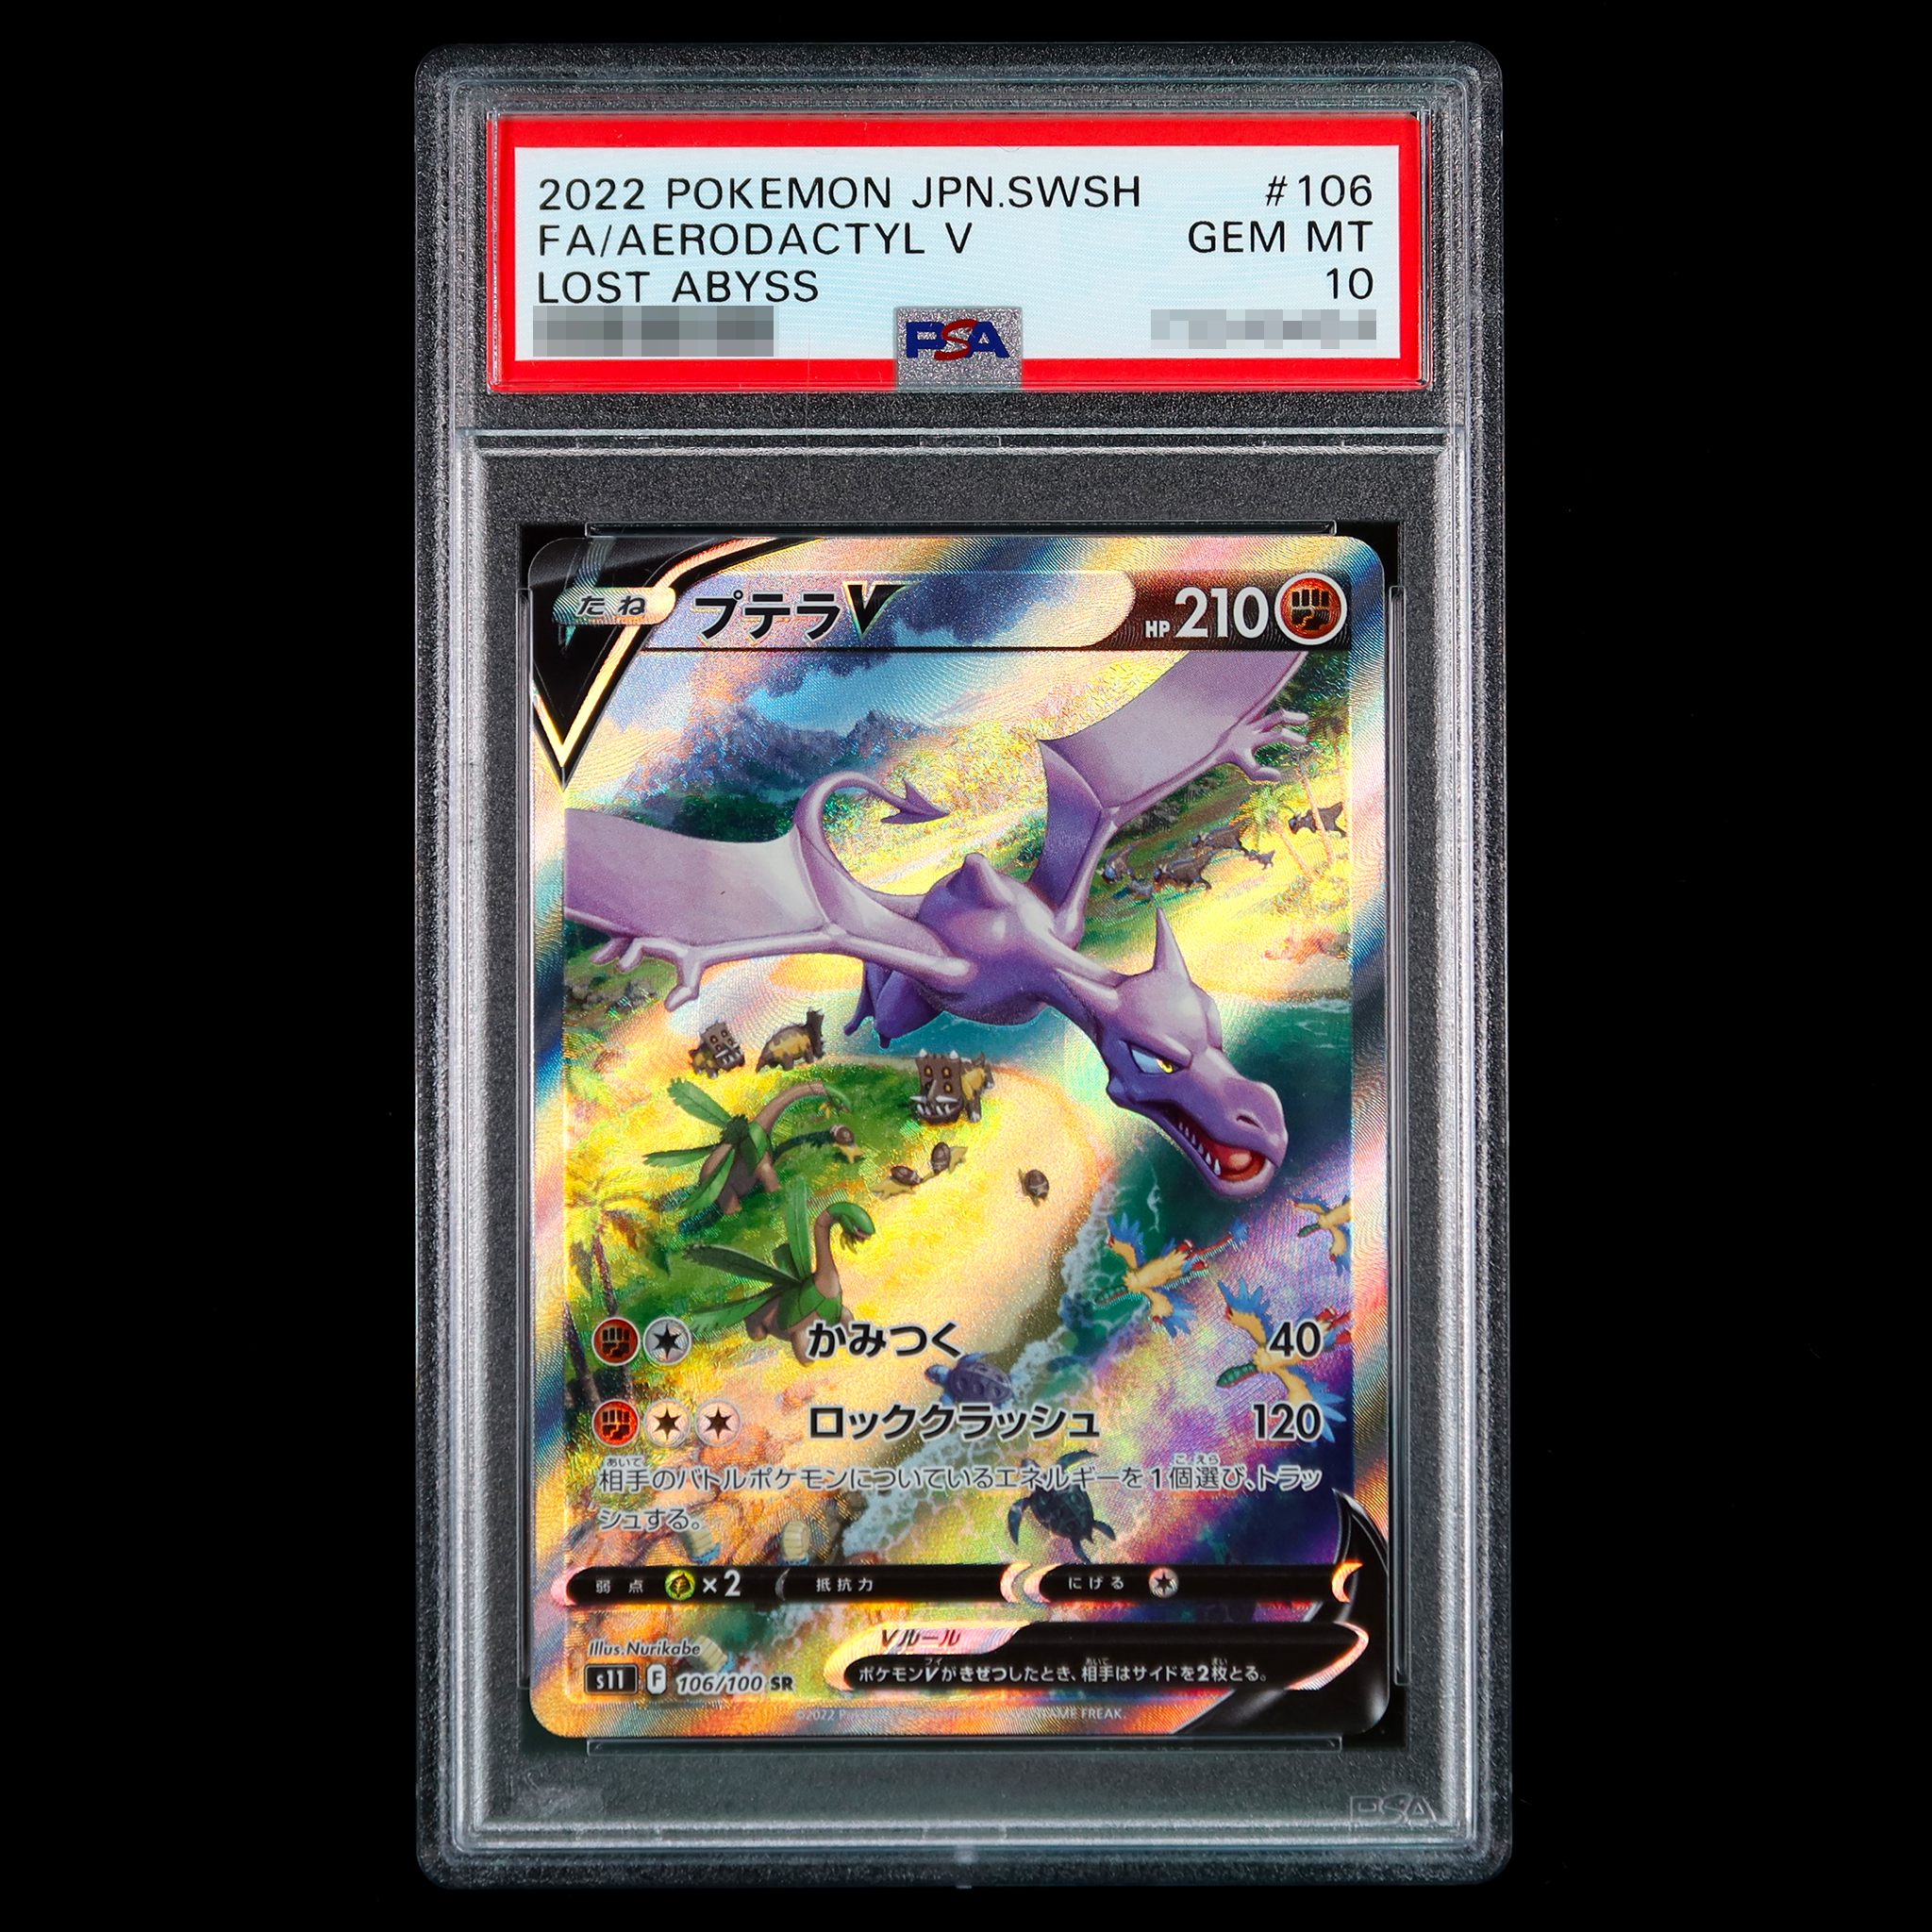 Aerodactyl (151) - PokemonCard